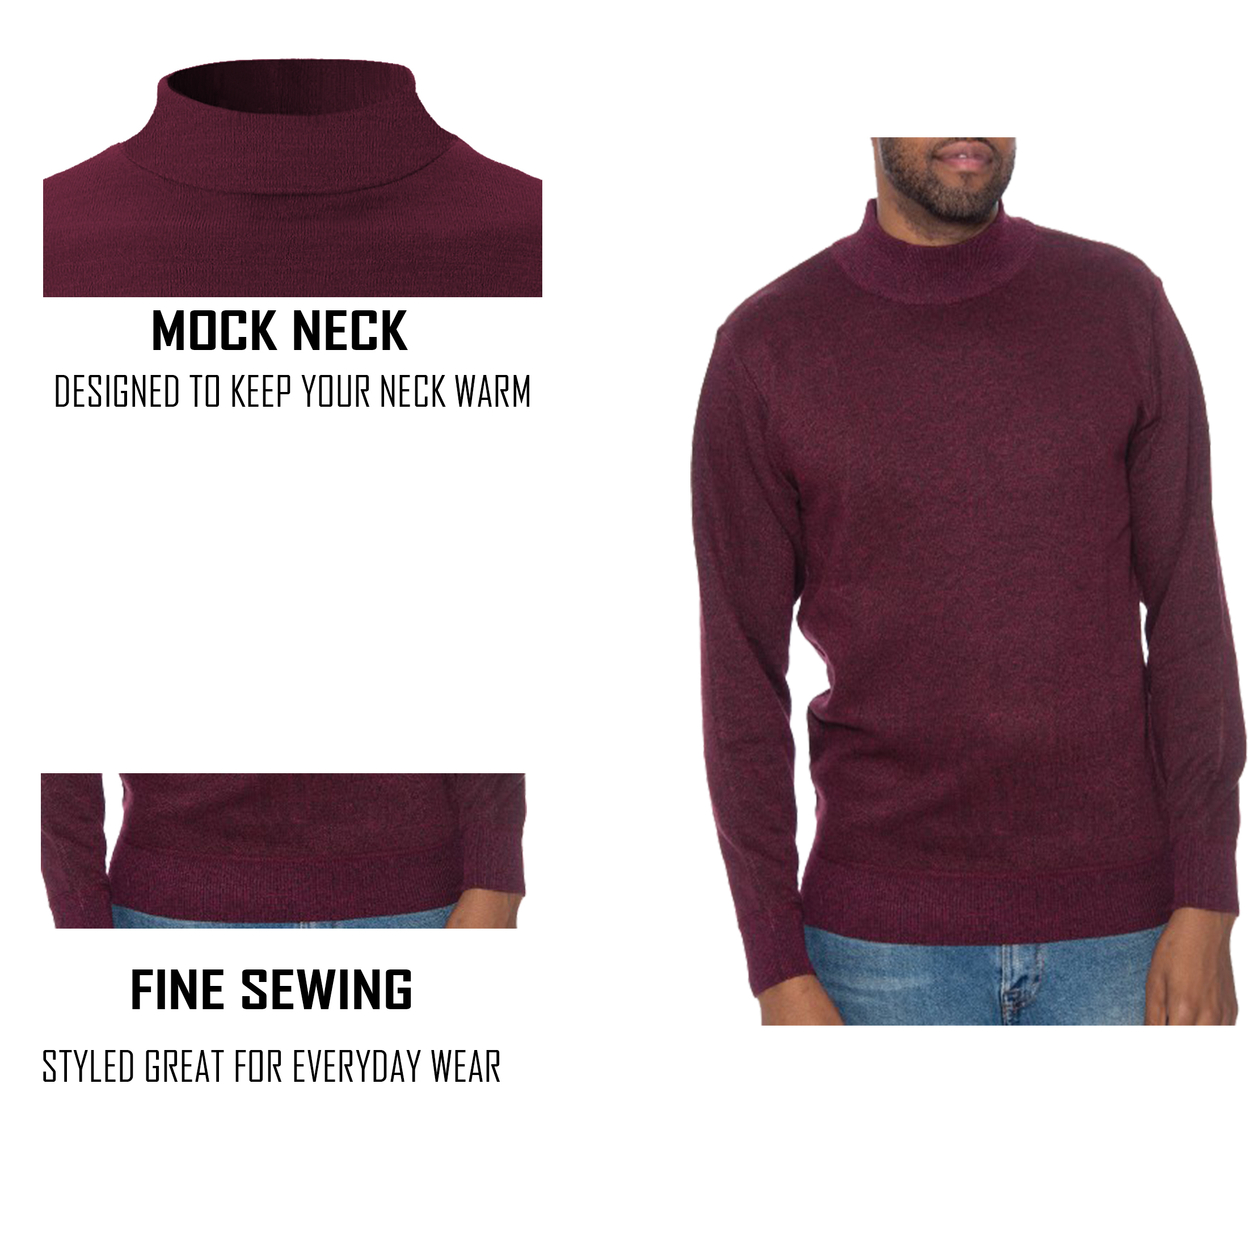 2-Pack: Men's Winter Warm Cozy Knit Slim Fit Mock Neck Sweater - Black & White, Large